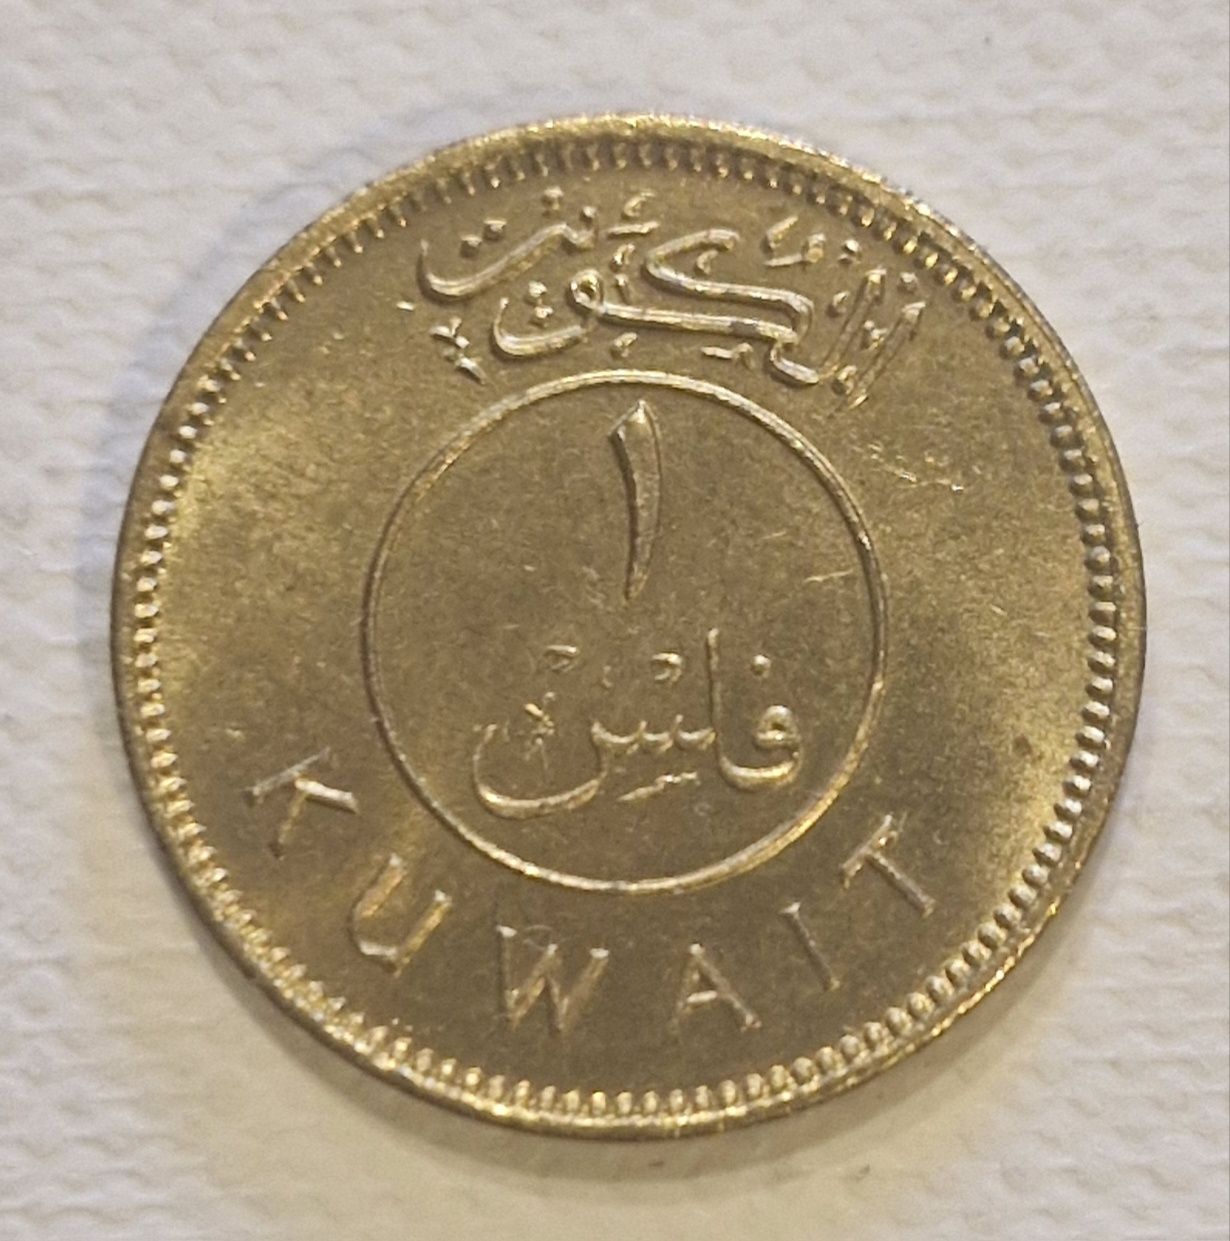 Moneta 1 fils Kuwait.